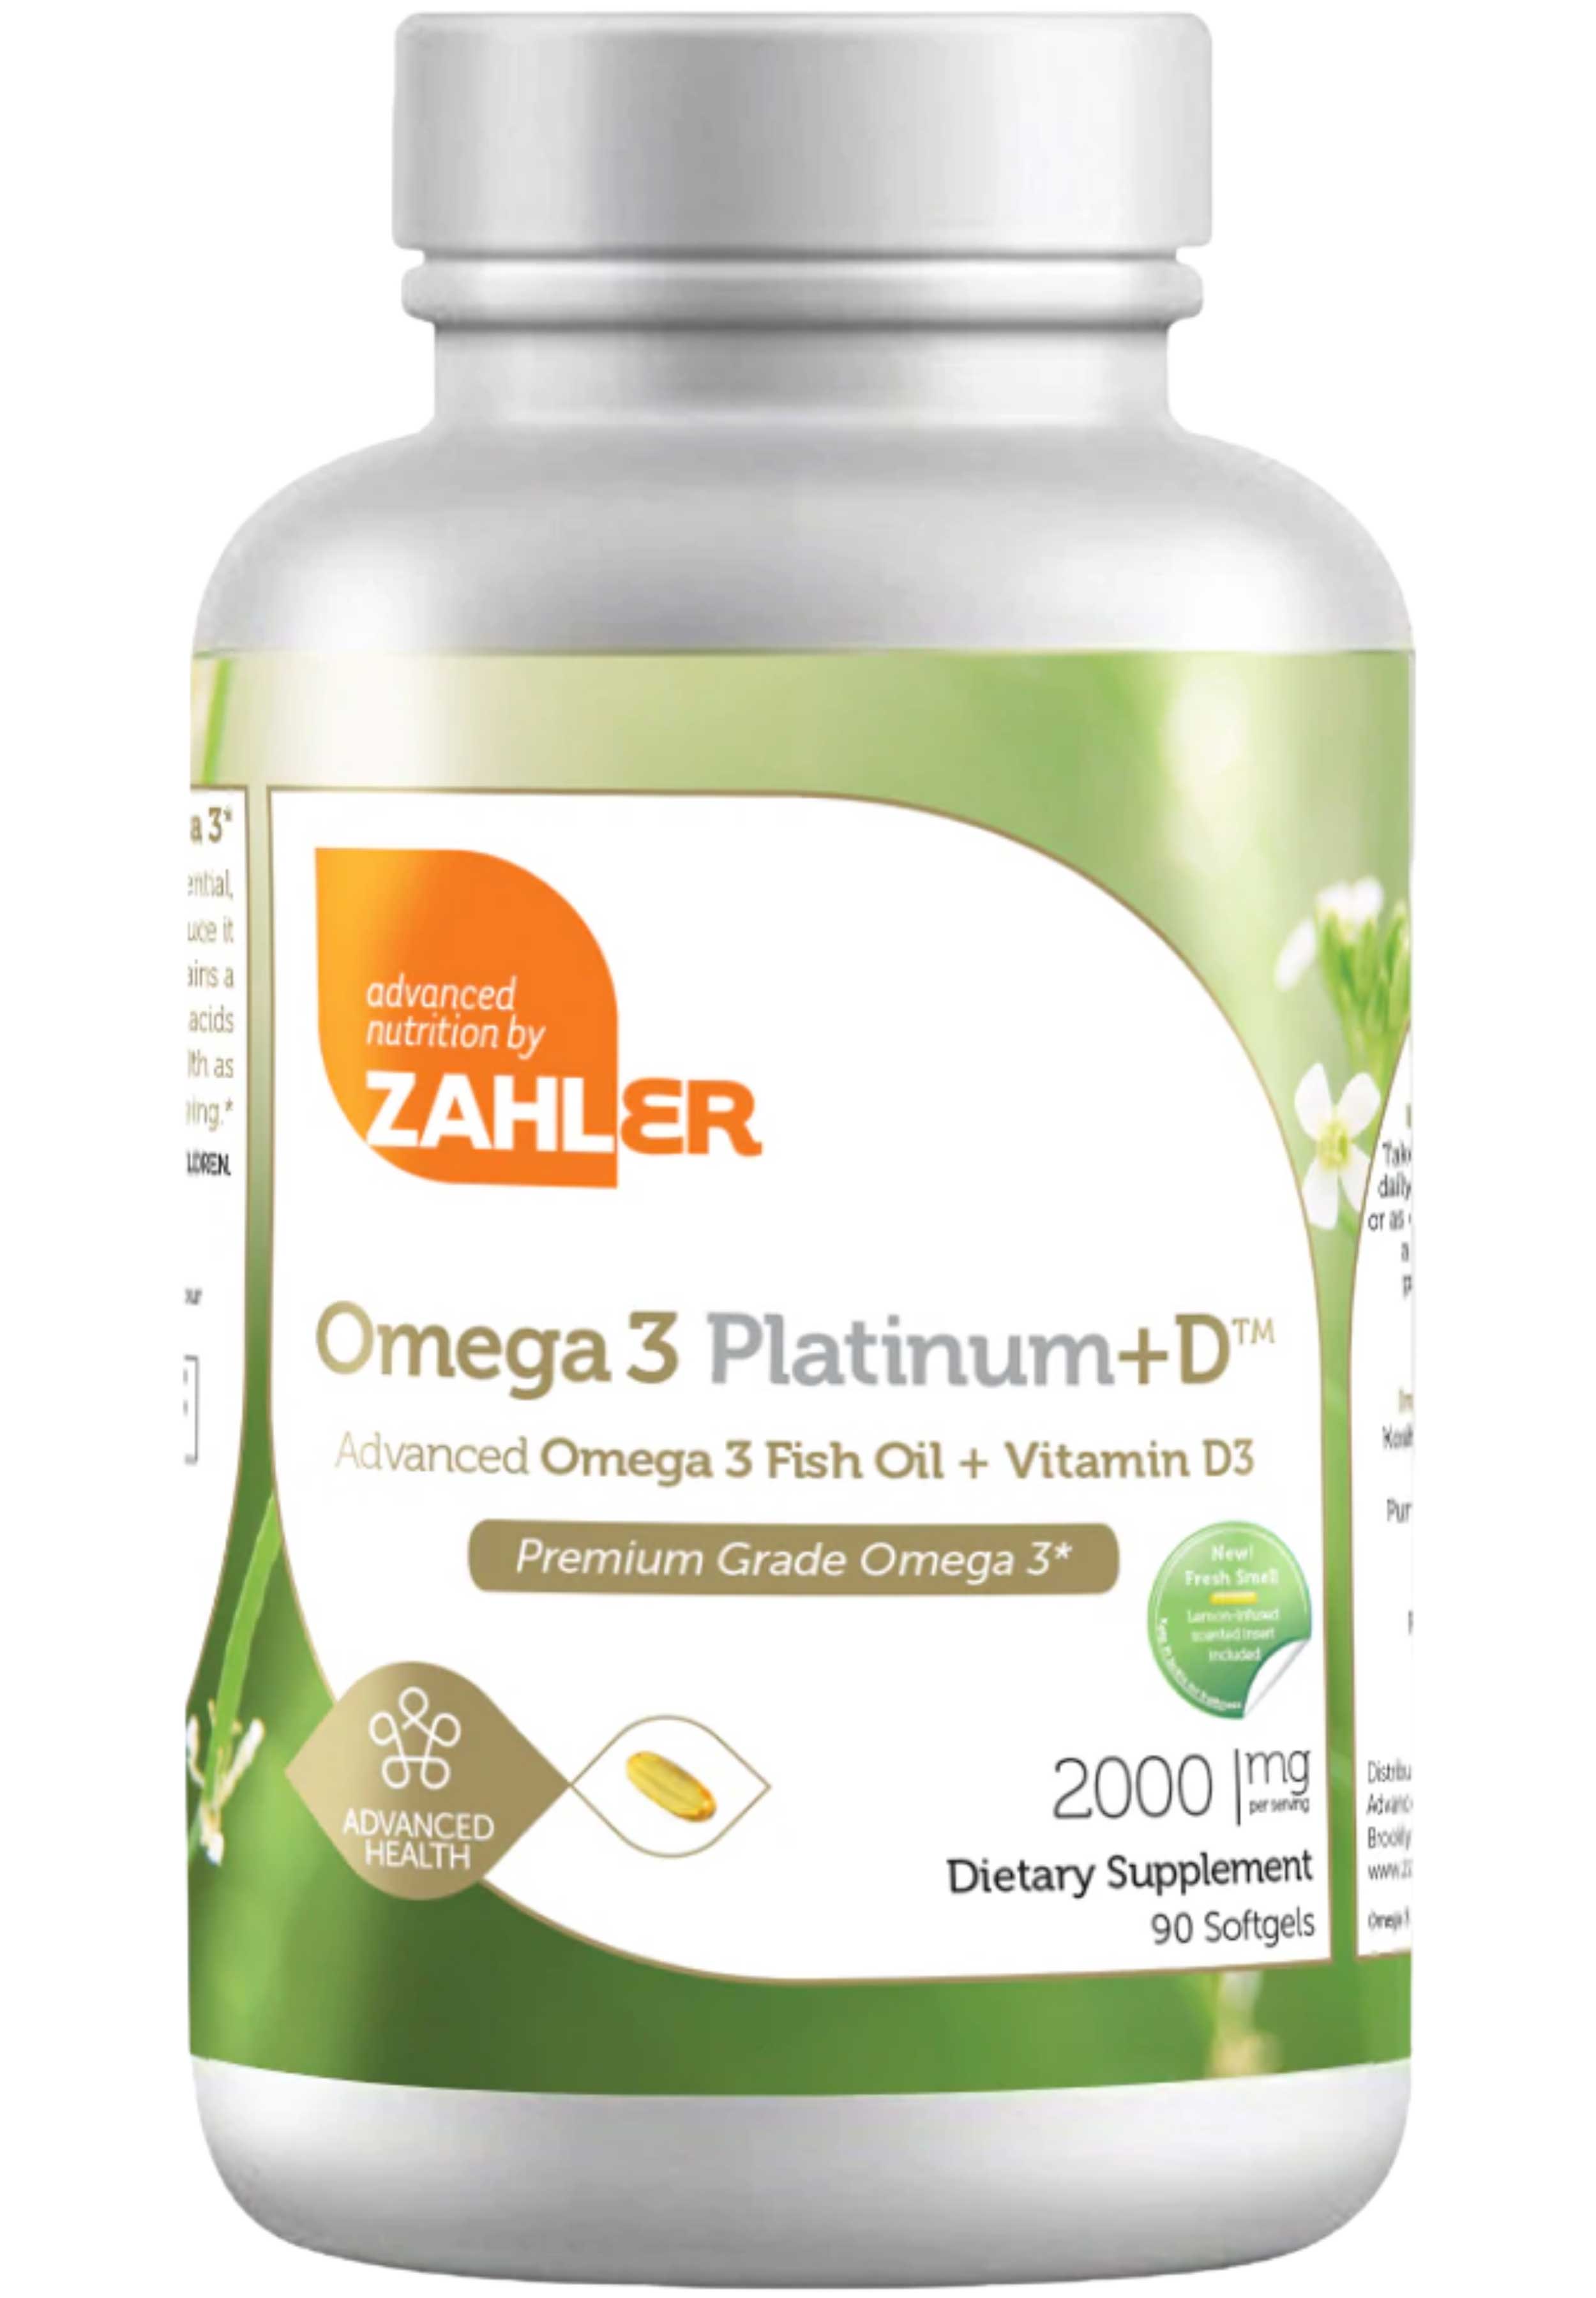 Advanced Nutrition By Zahler Omega 3 Platinum + D